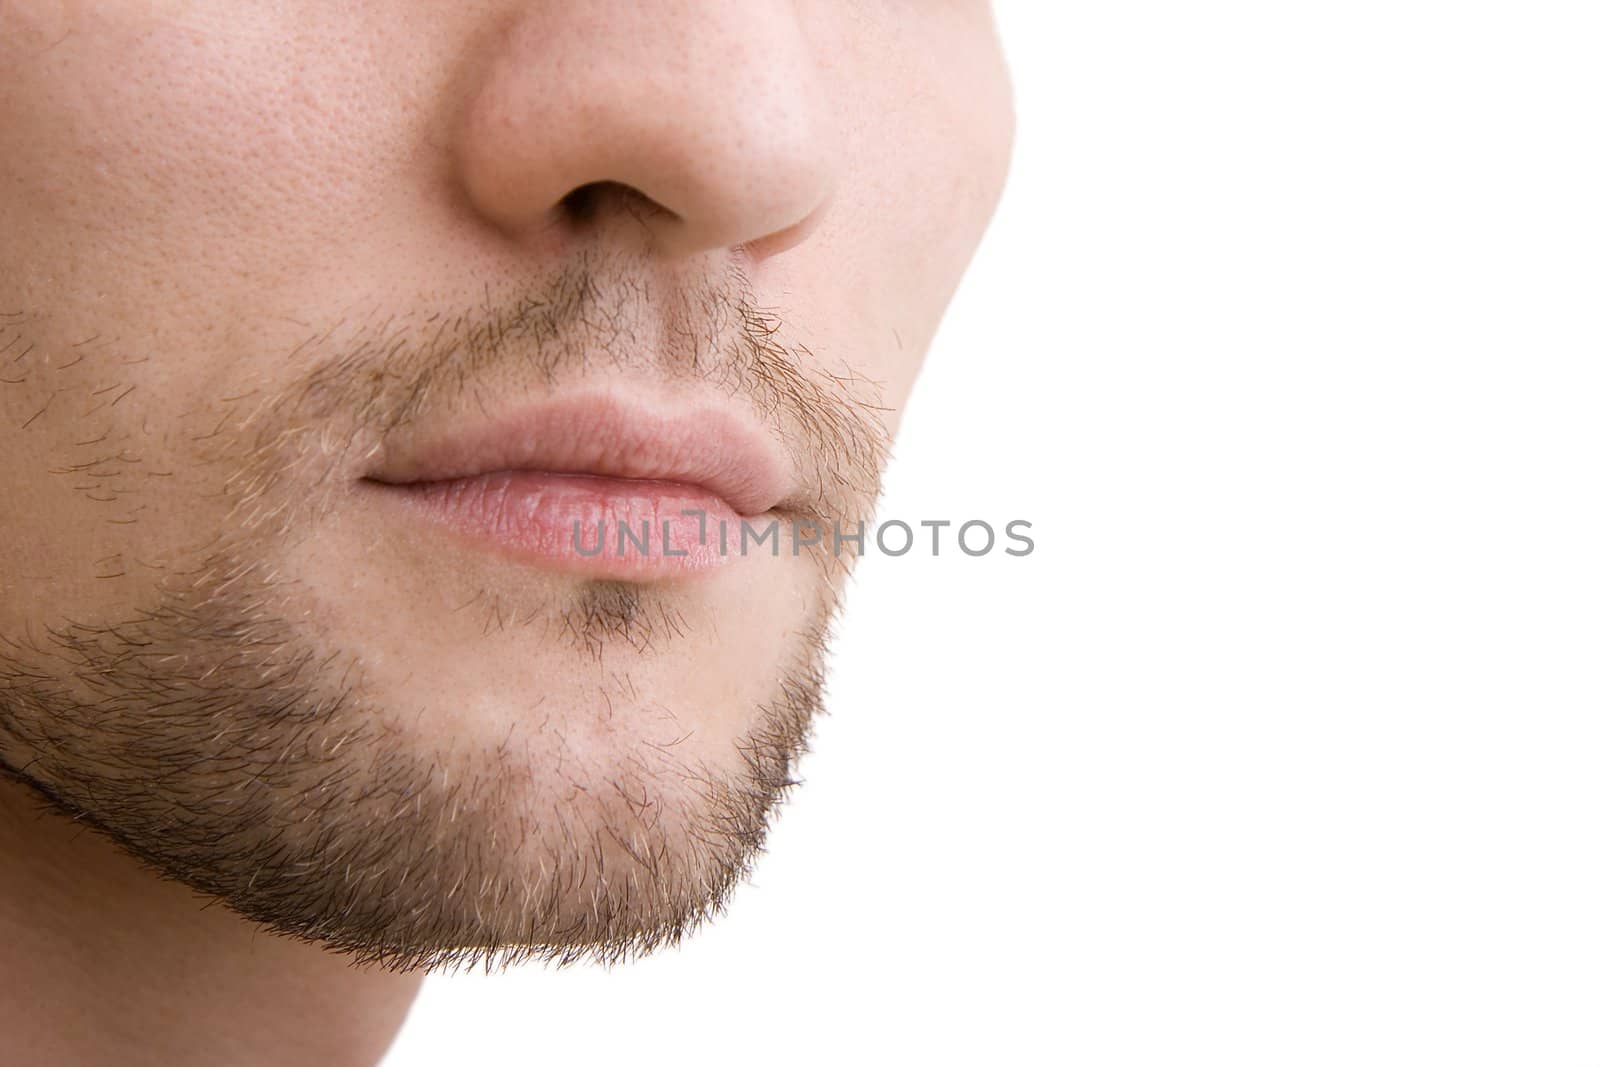 Unshaven bottom part of a man's face